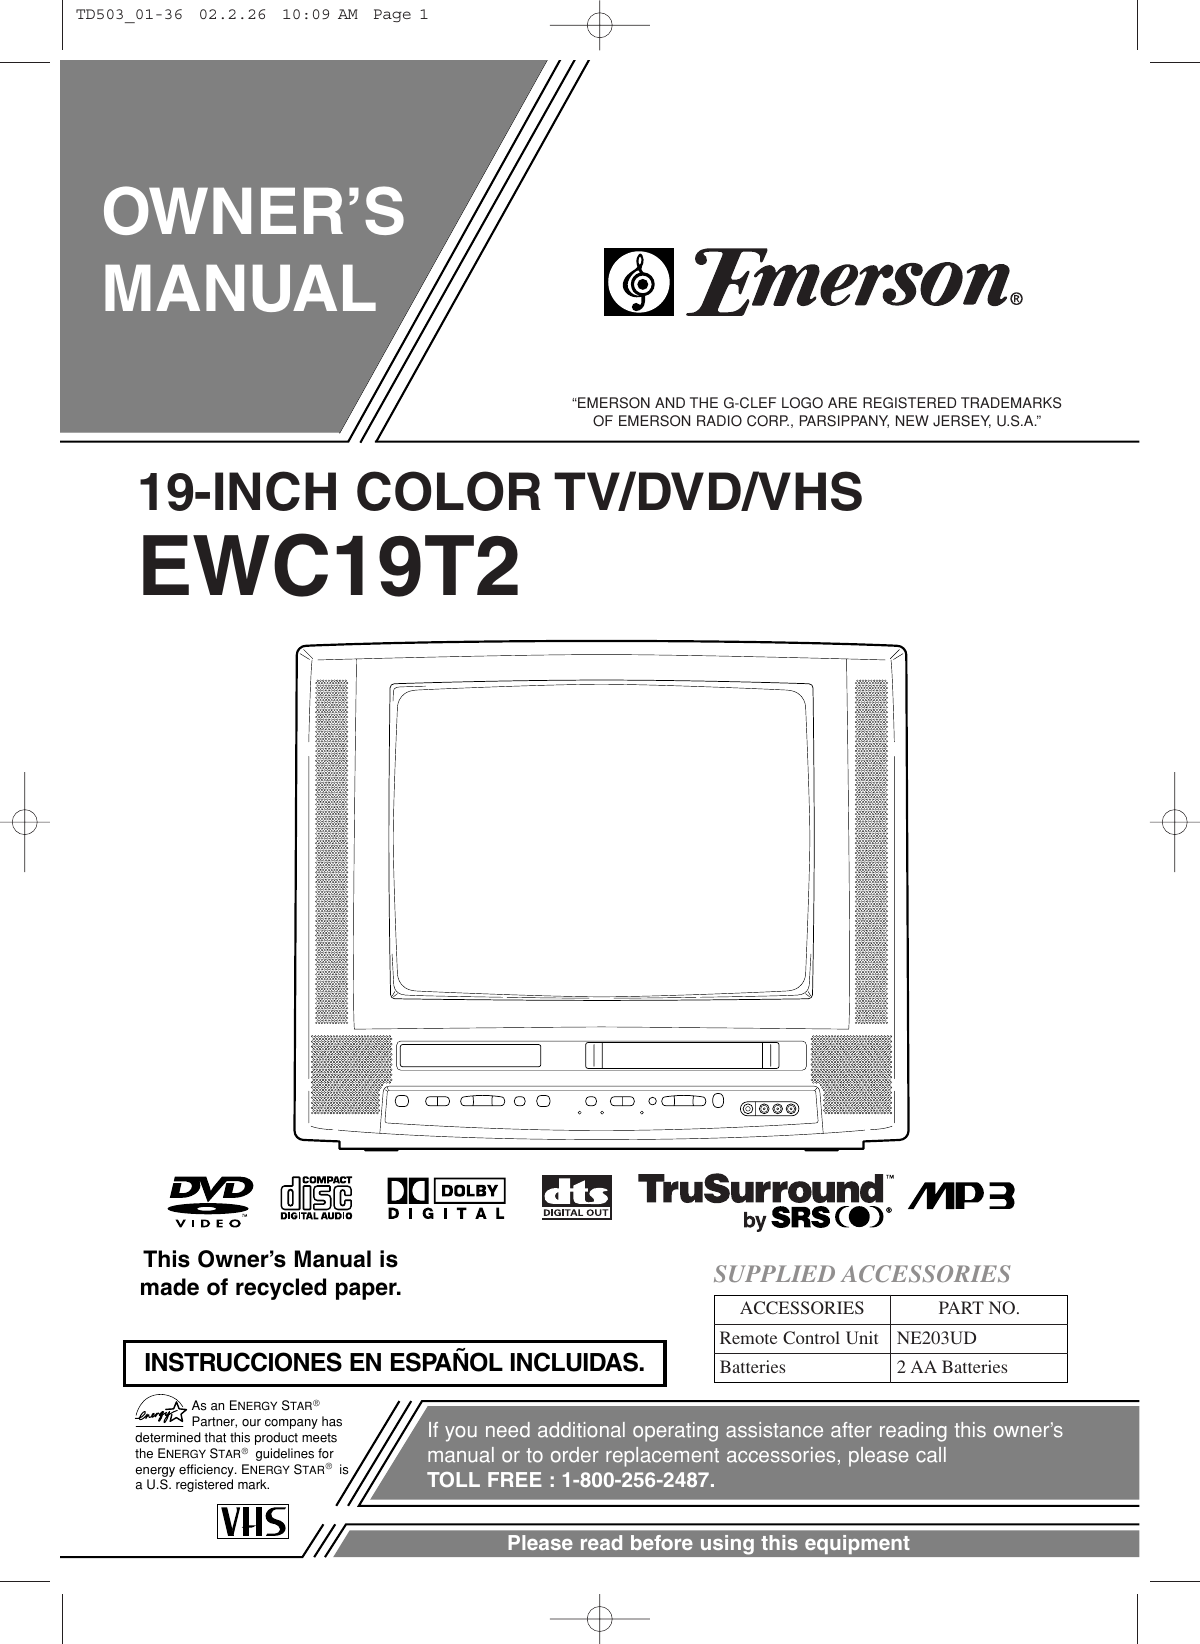 Emerson Ewc19T2 Owners Manual TD503_01 36